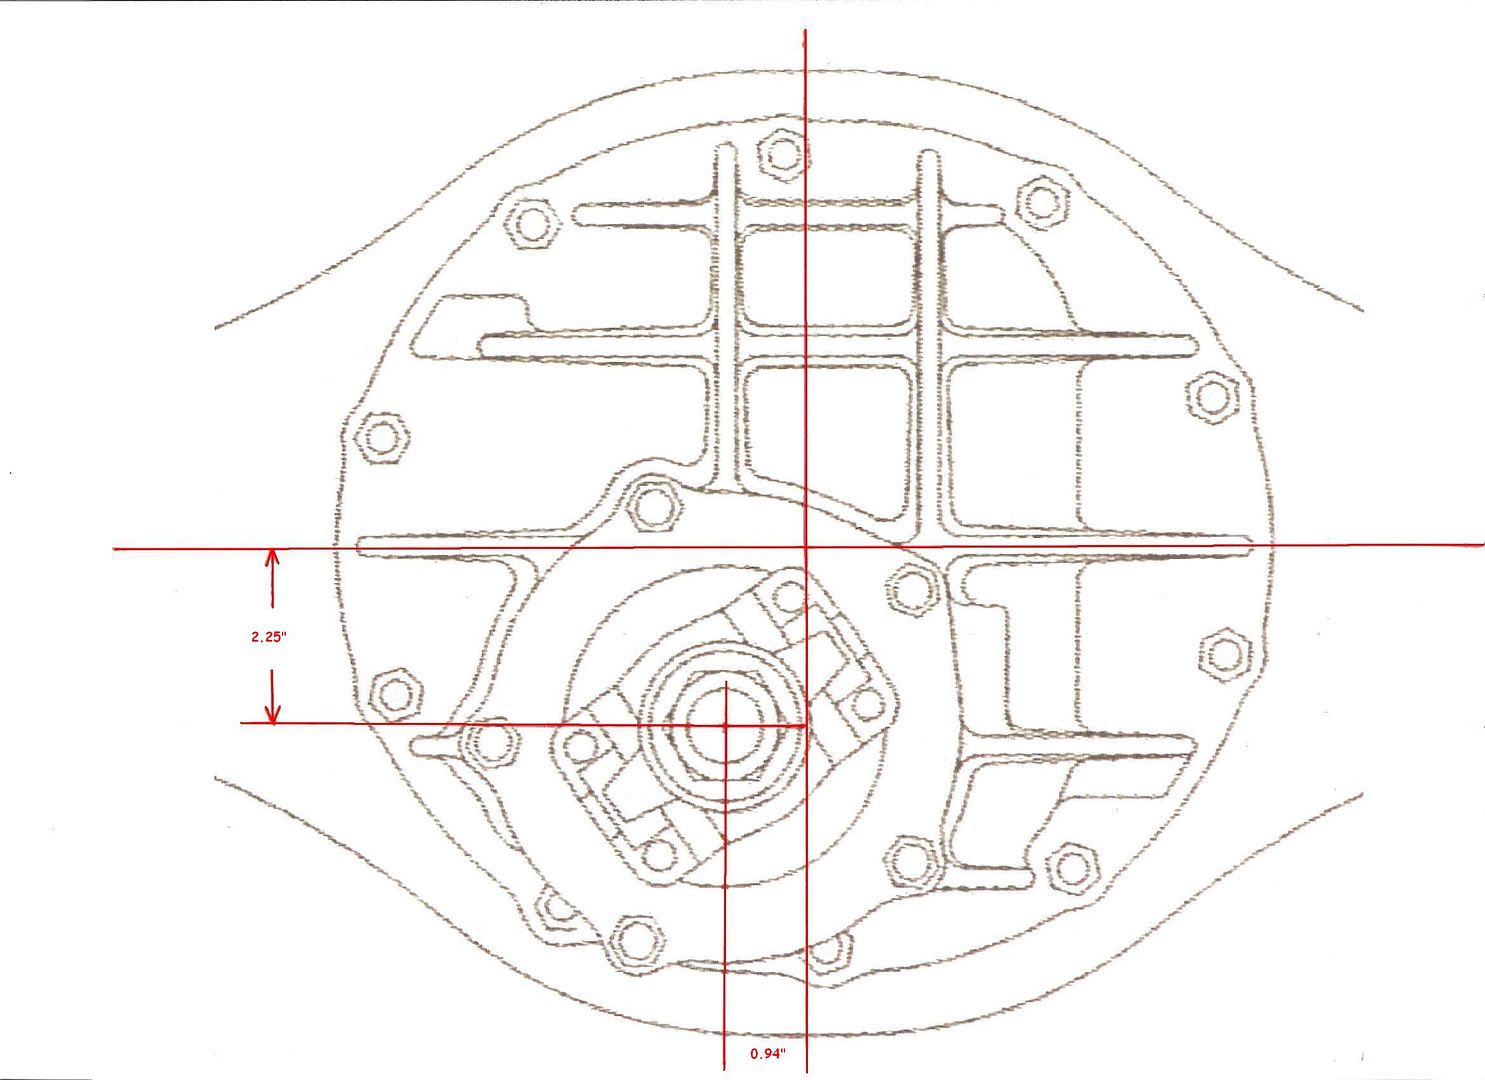 9 Inch ford rear end dimensions #3